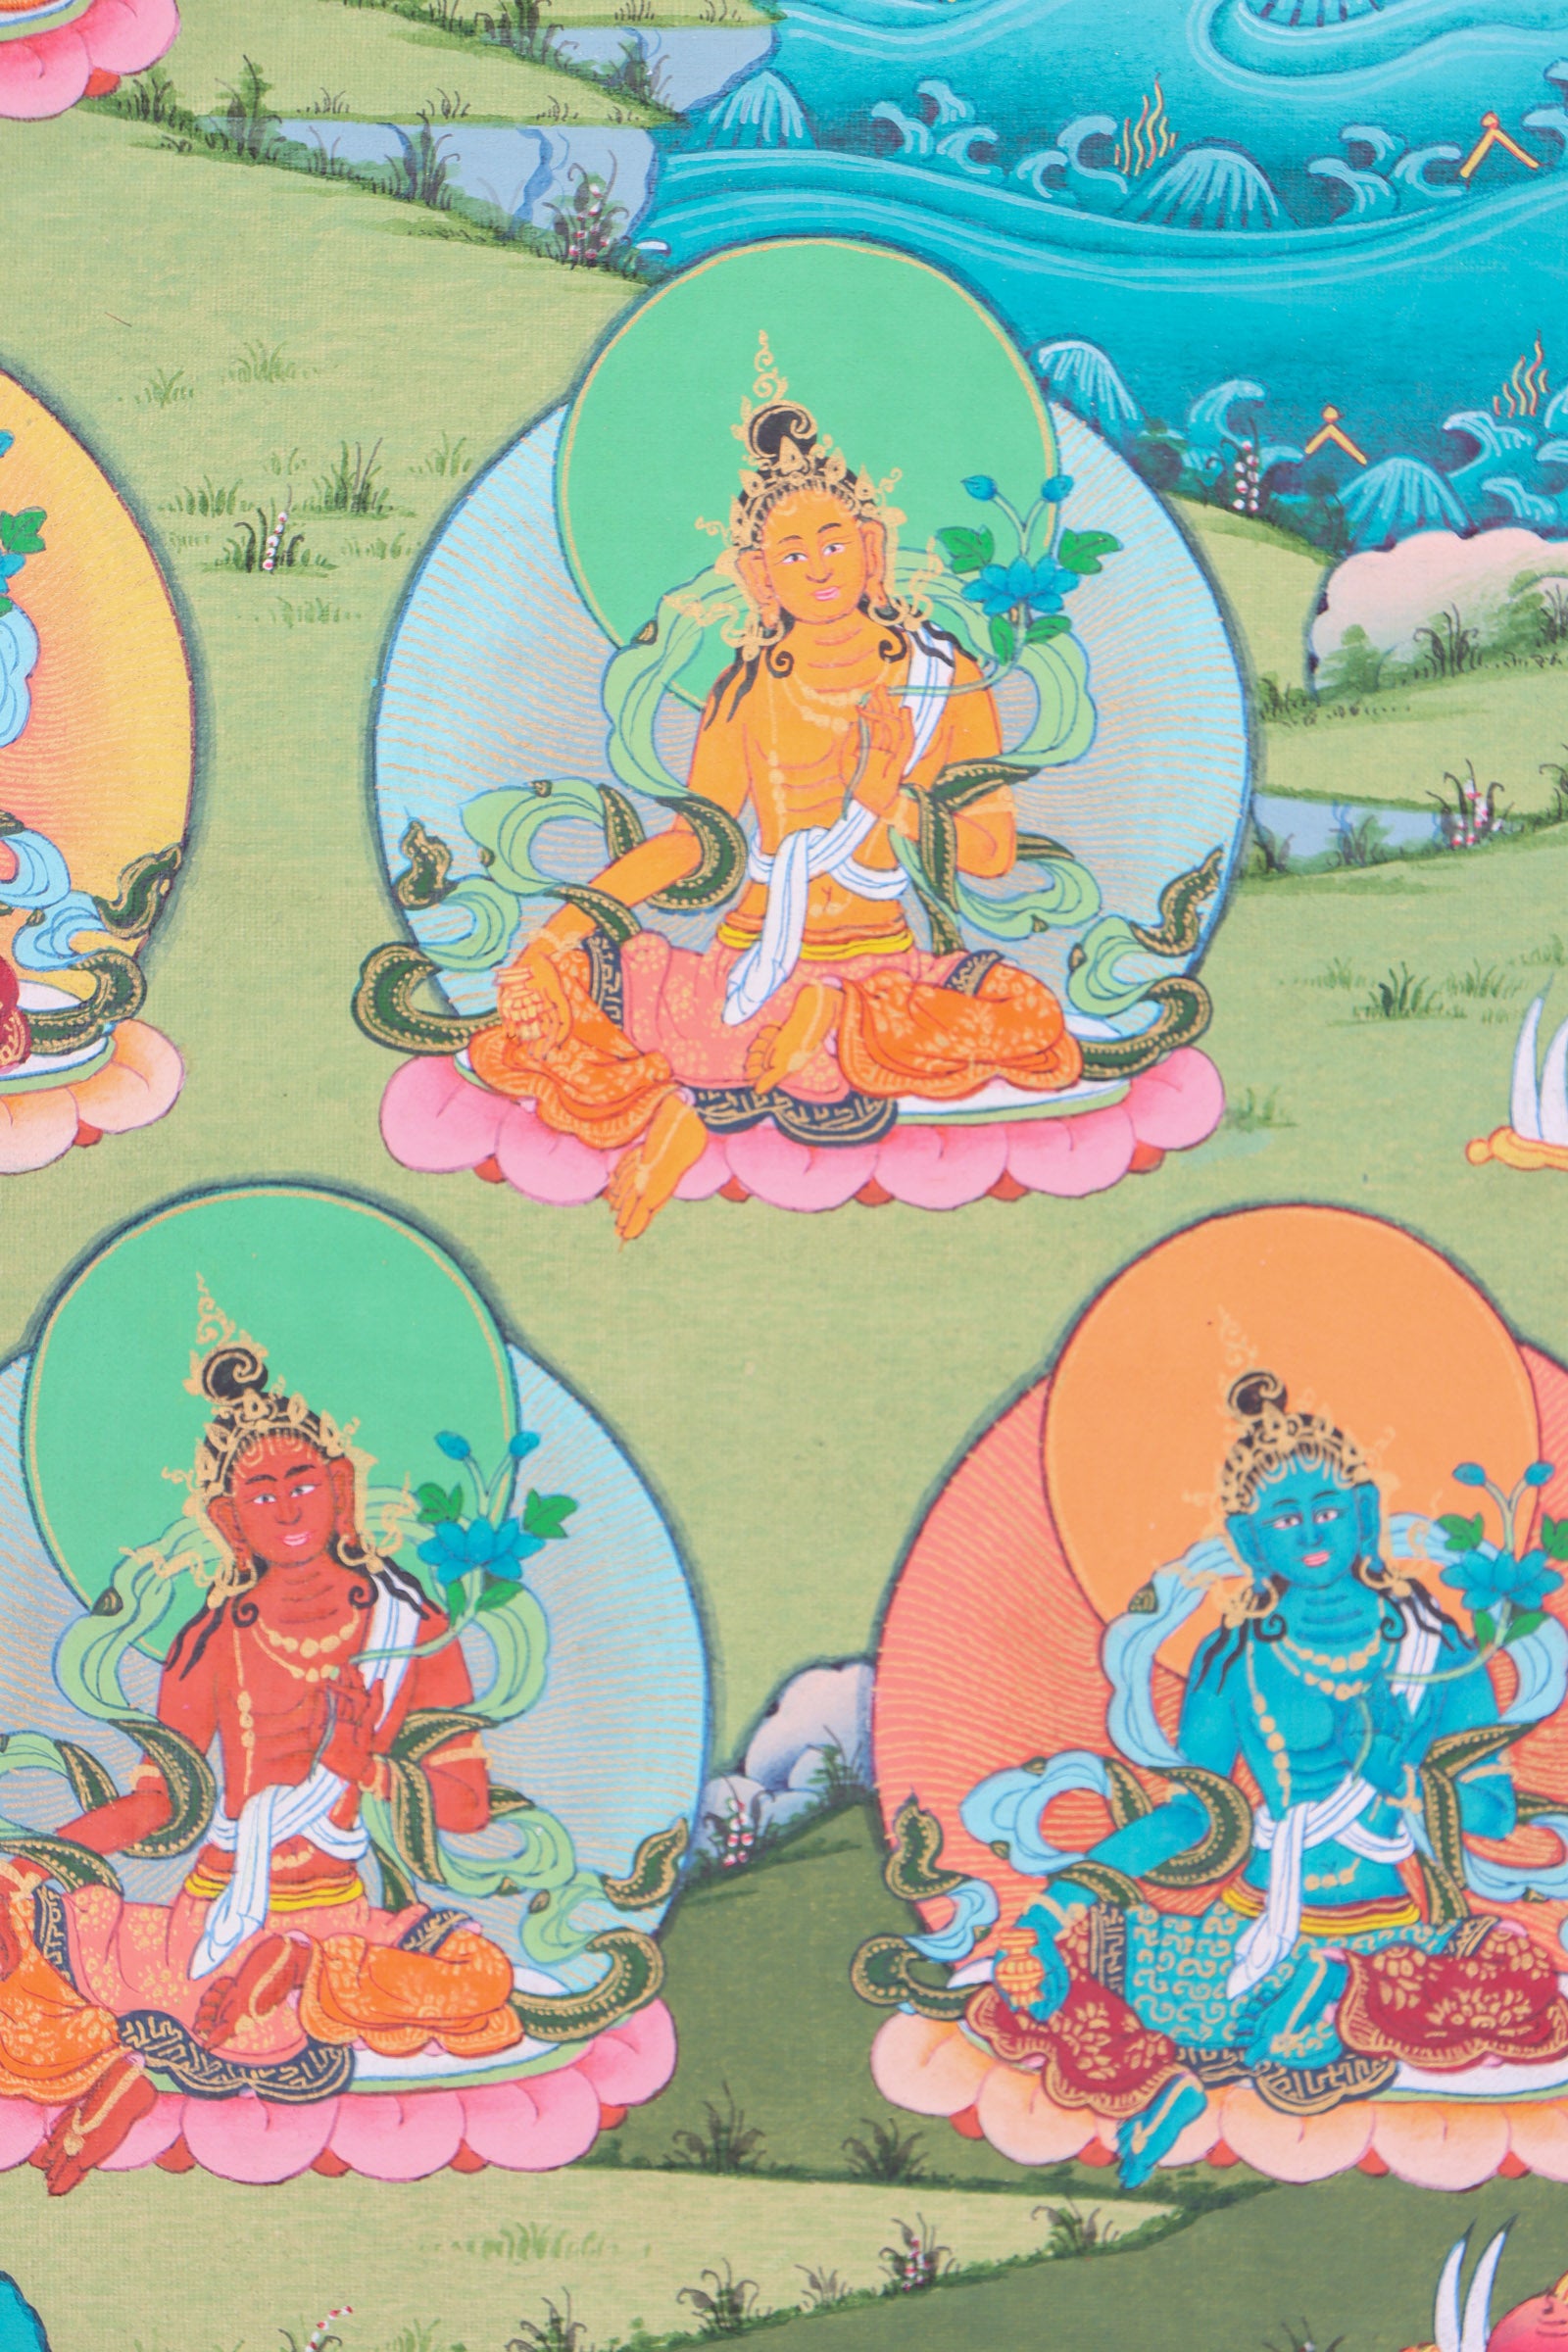  21 Tara Thangka Painting for enlightment and wisdom.